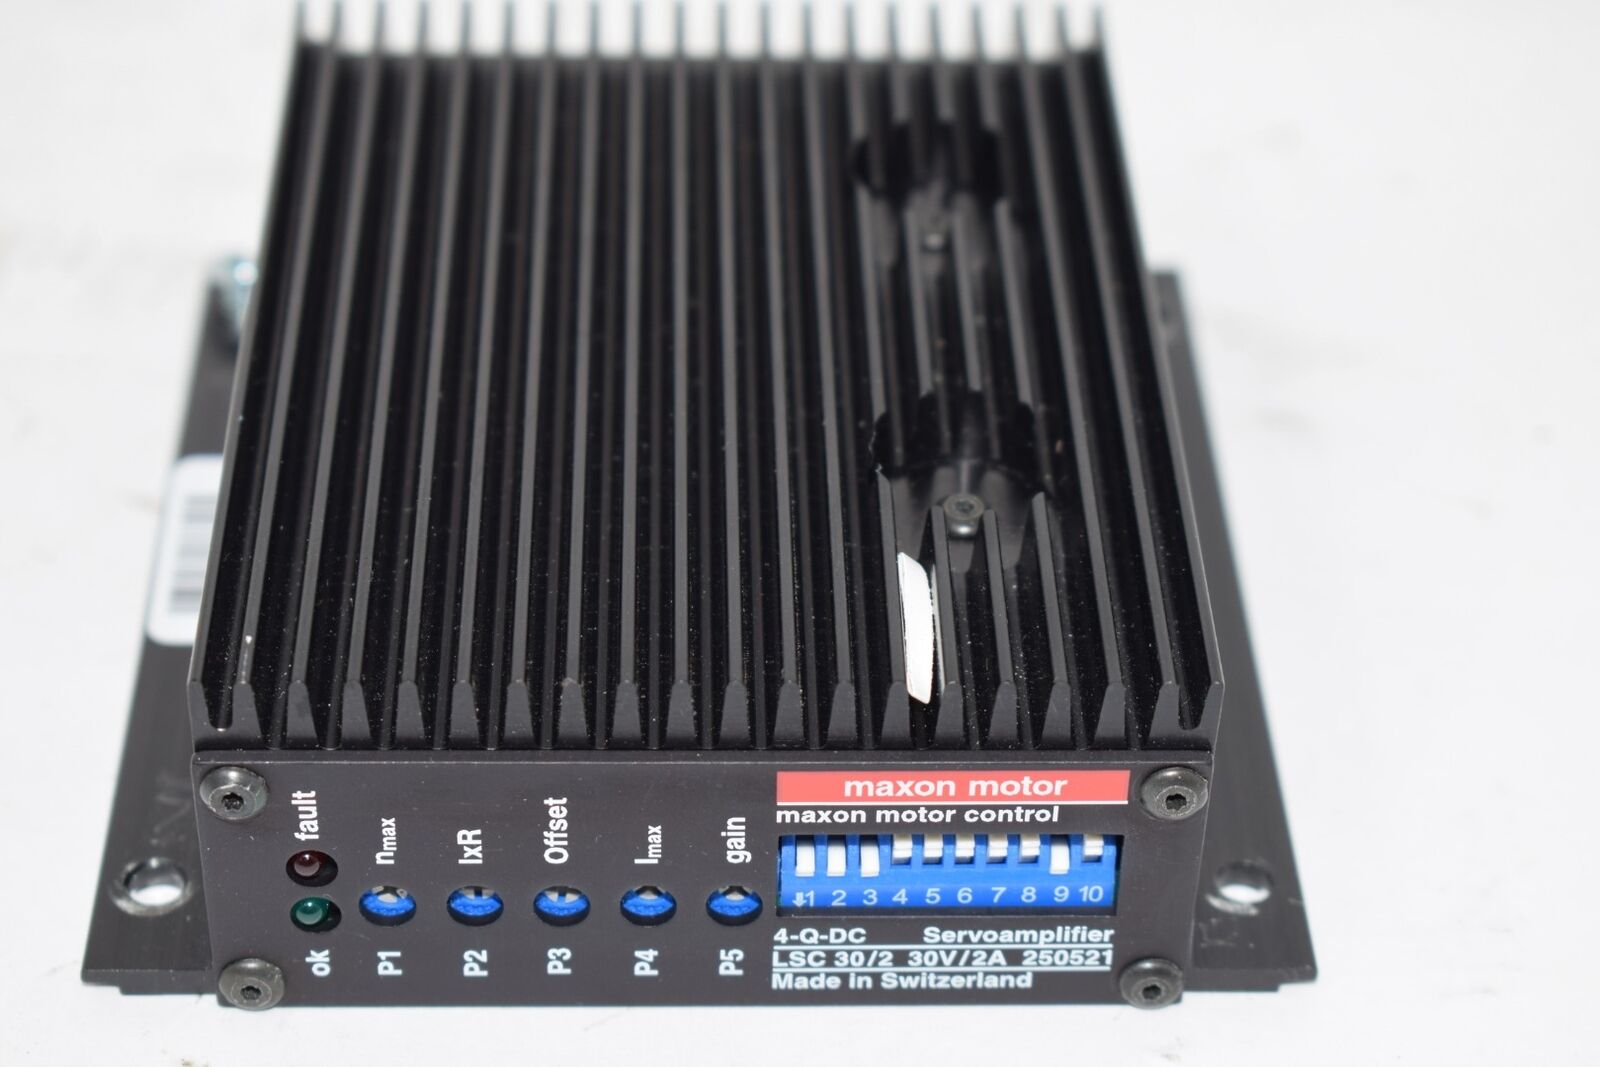 Maxon Servoamplifier Motor Control 4-Q-DC 250521 Servo Amplifier 